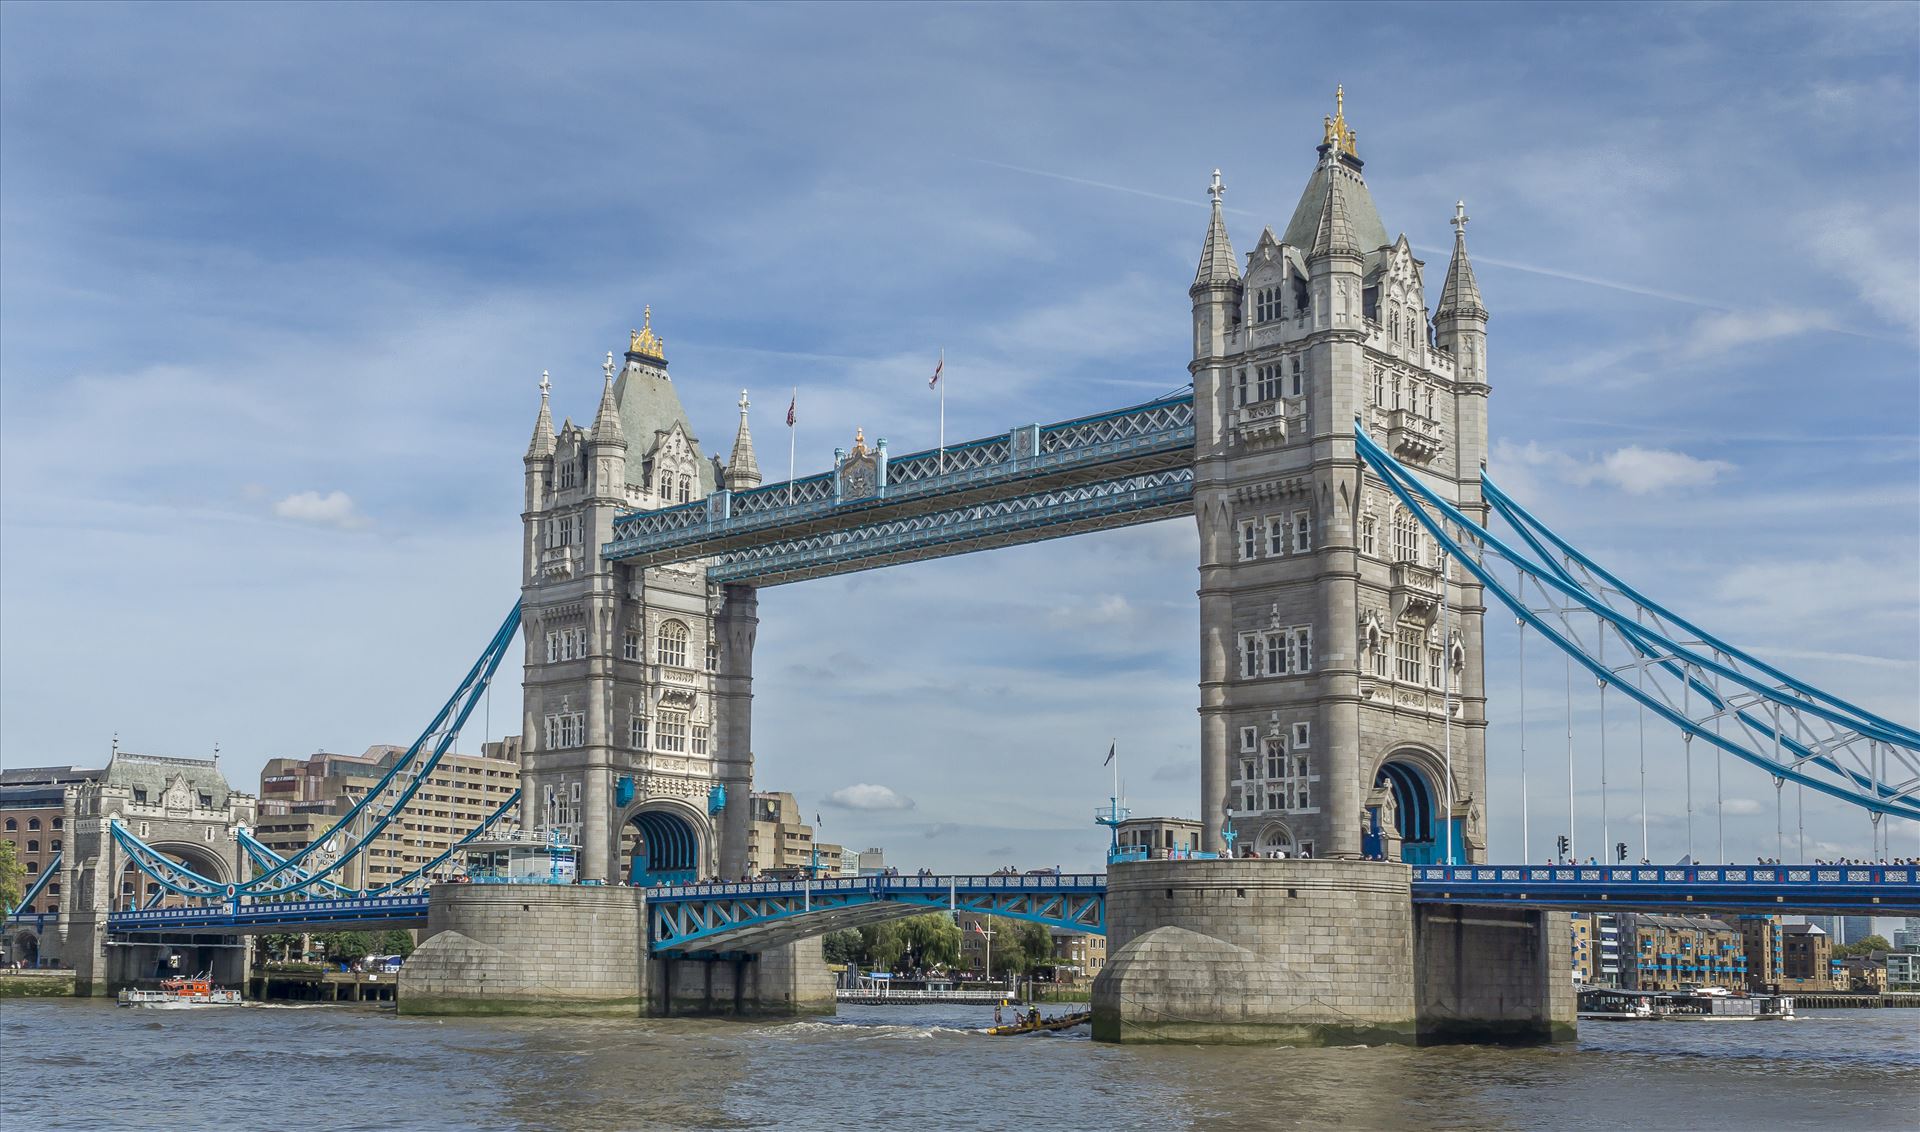 Tower Bridge Tower Bridge in London, England by Buckmaster